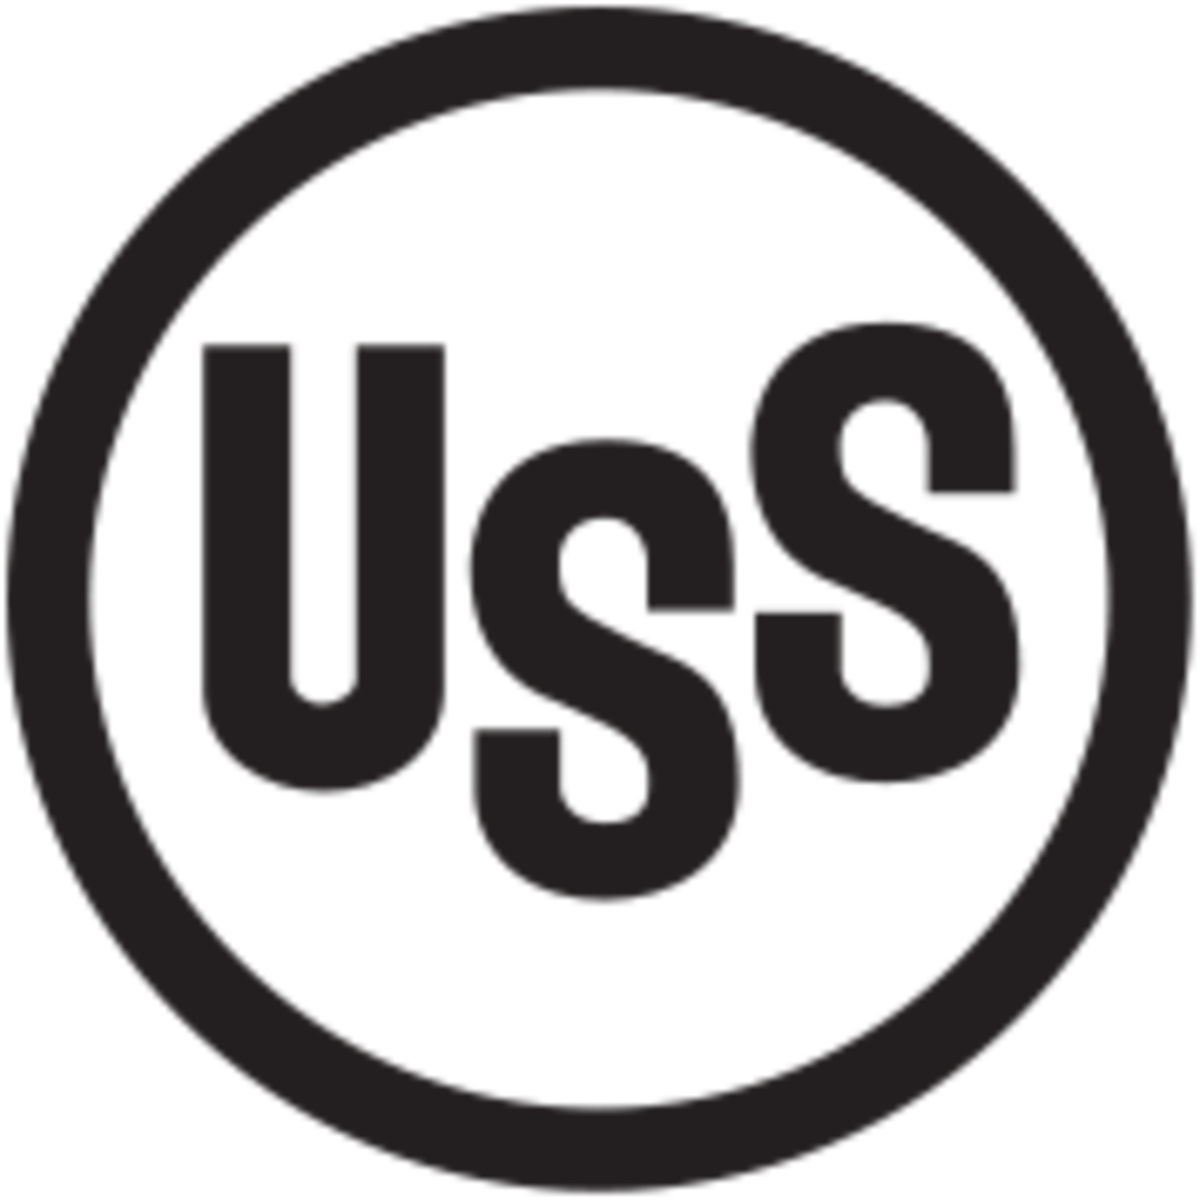 USS Logo